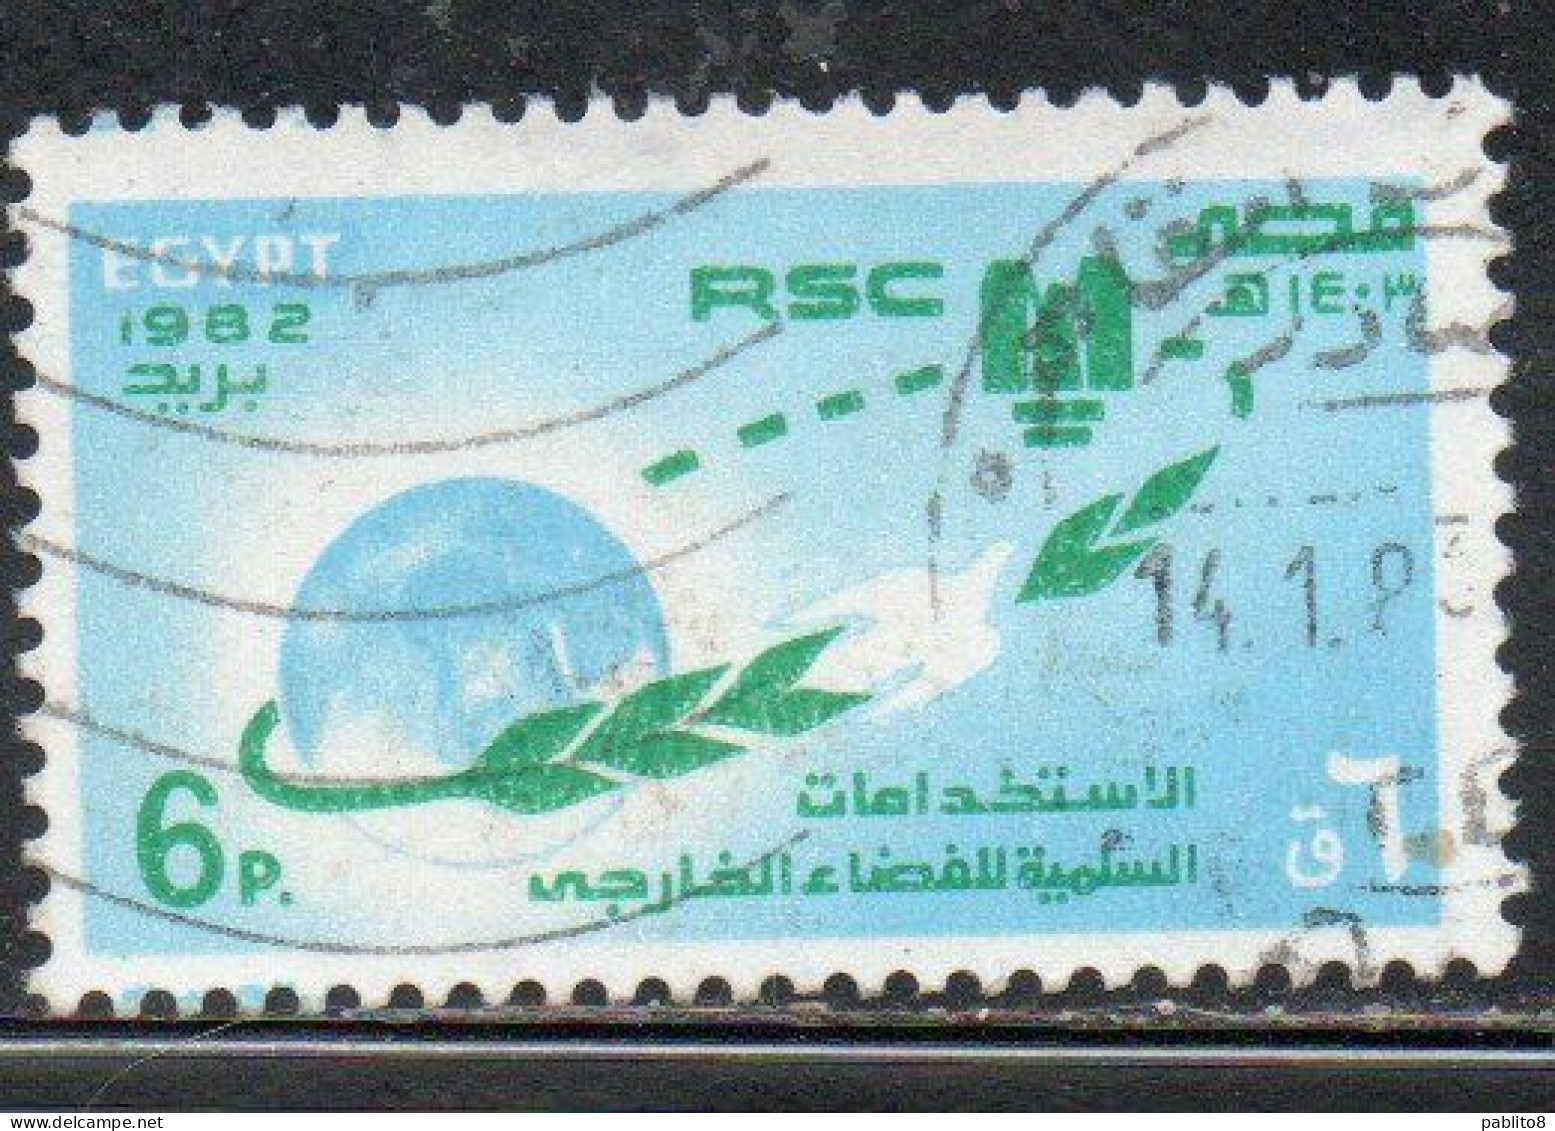 UAR EGYPT EGITTO 1982 UN ONU CONFERENCE ON PEACEFUL USES OF OUTER SPACE VIENNA 6p USED USATO OBLITERE' - Oblitérés